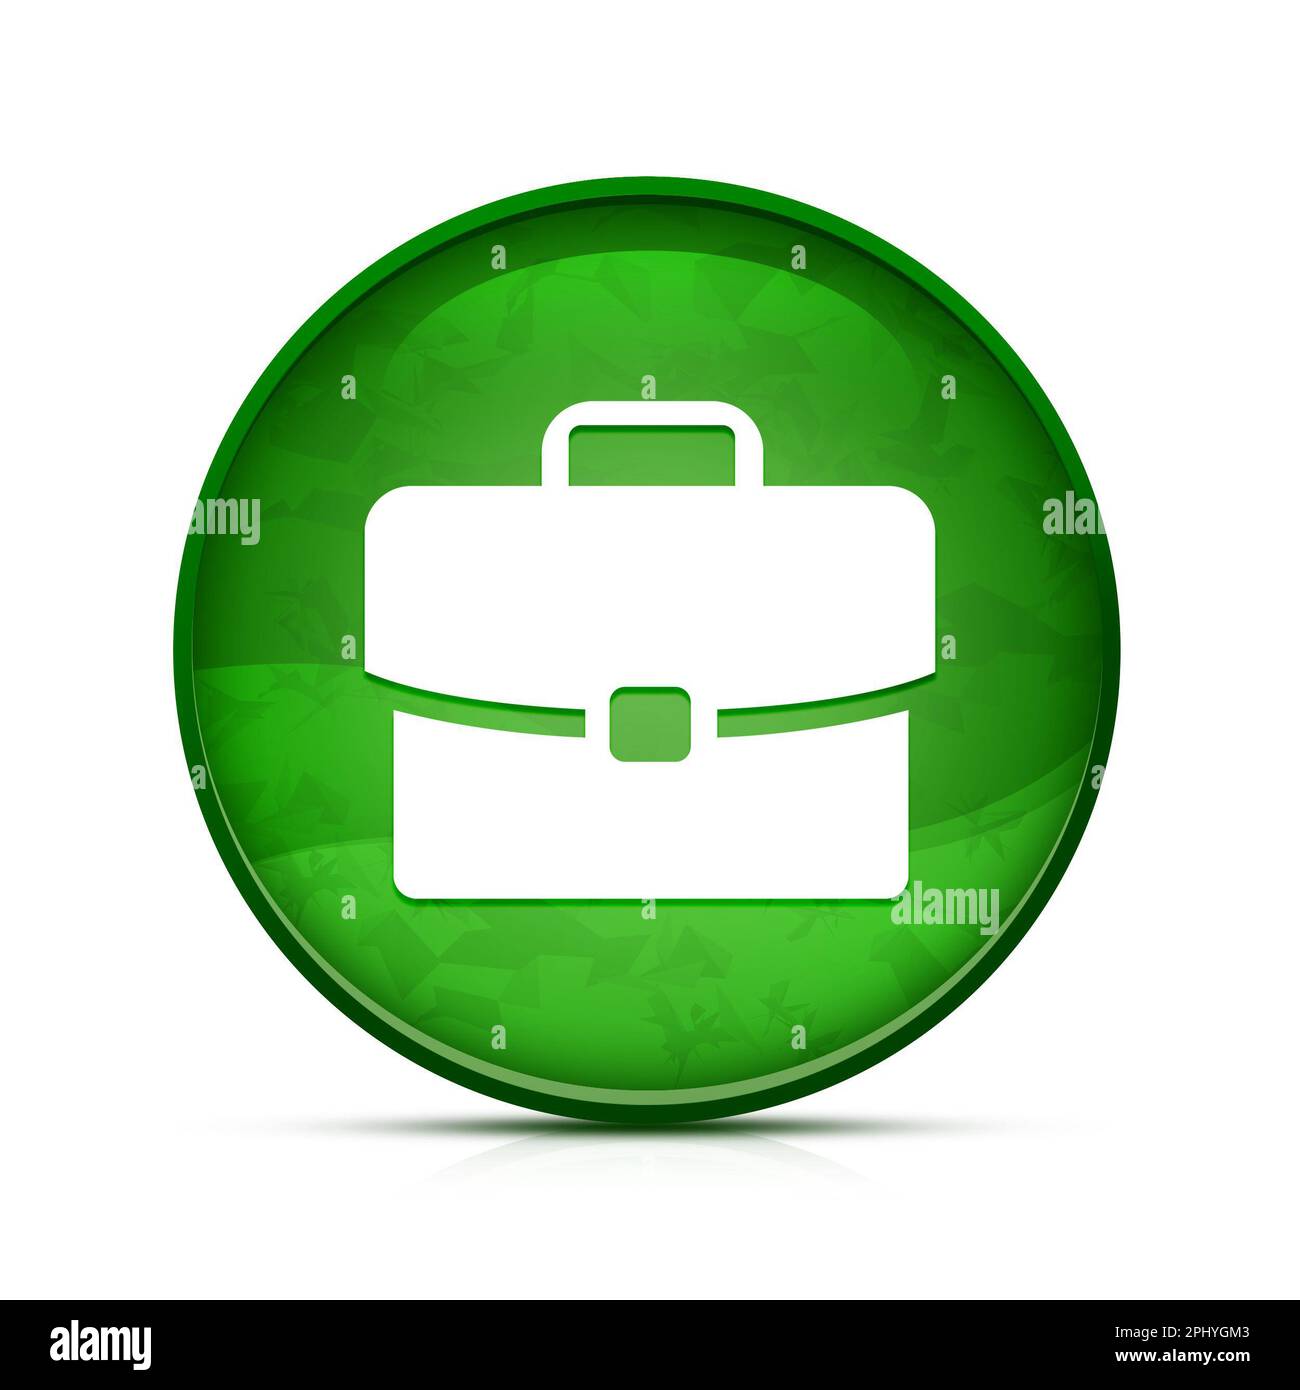 Work experience icon on classy splash green round button Stock Photo